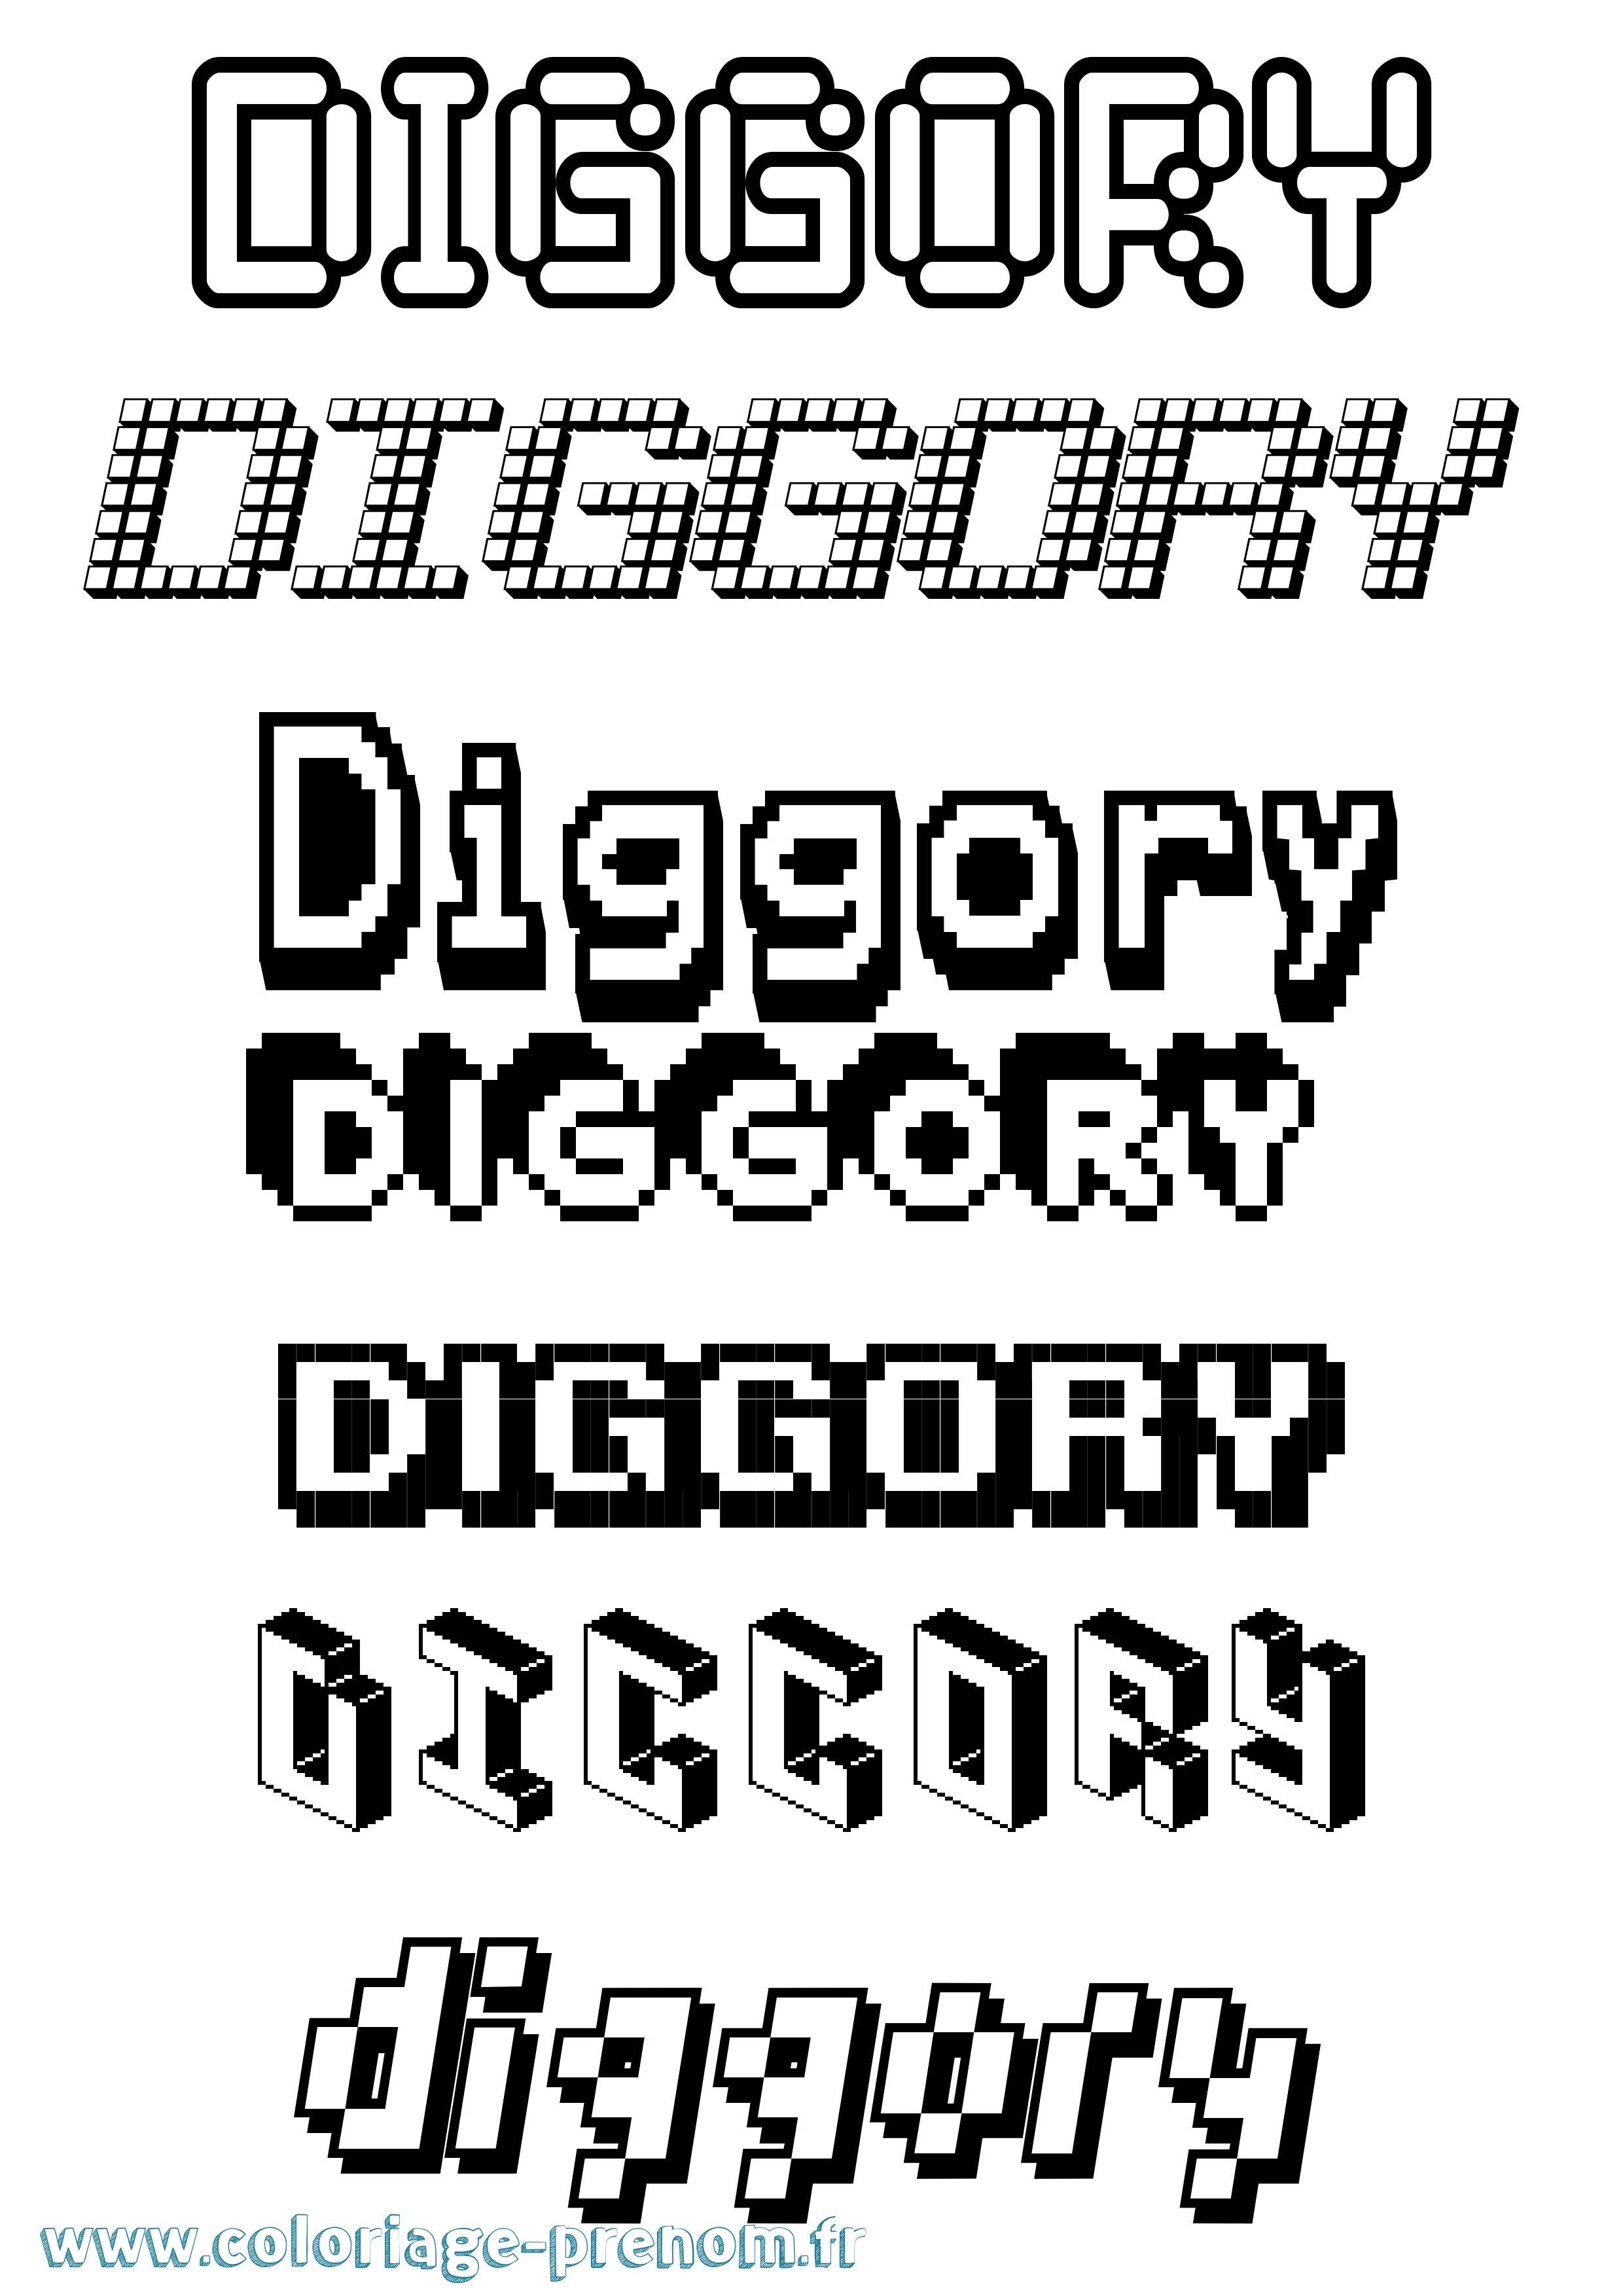 Coloriage prénom Diggory Pixel